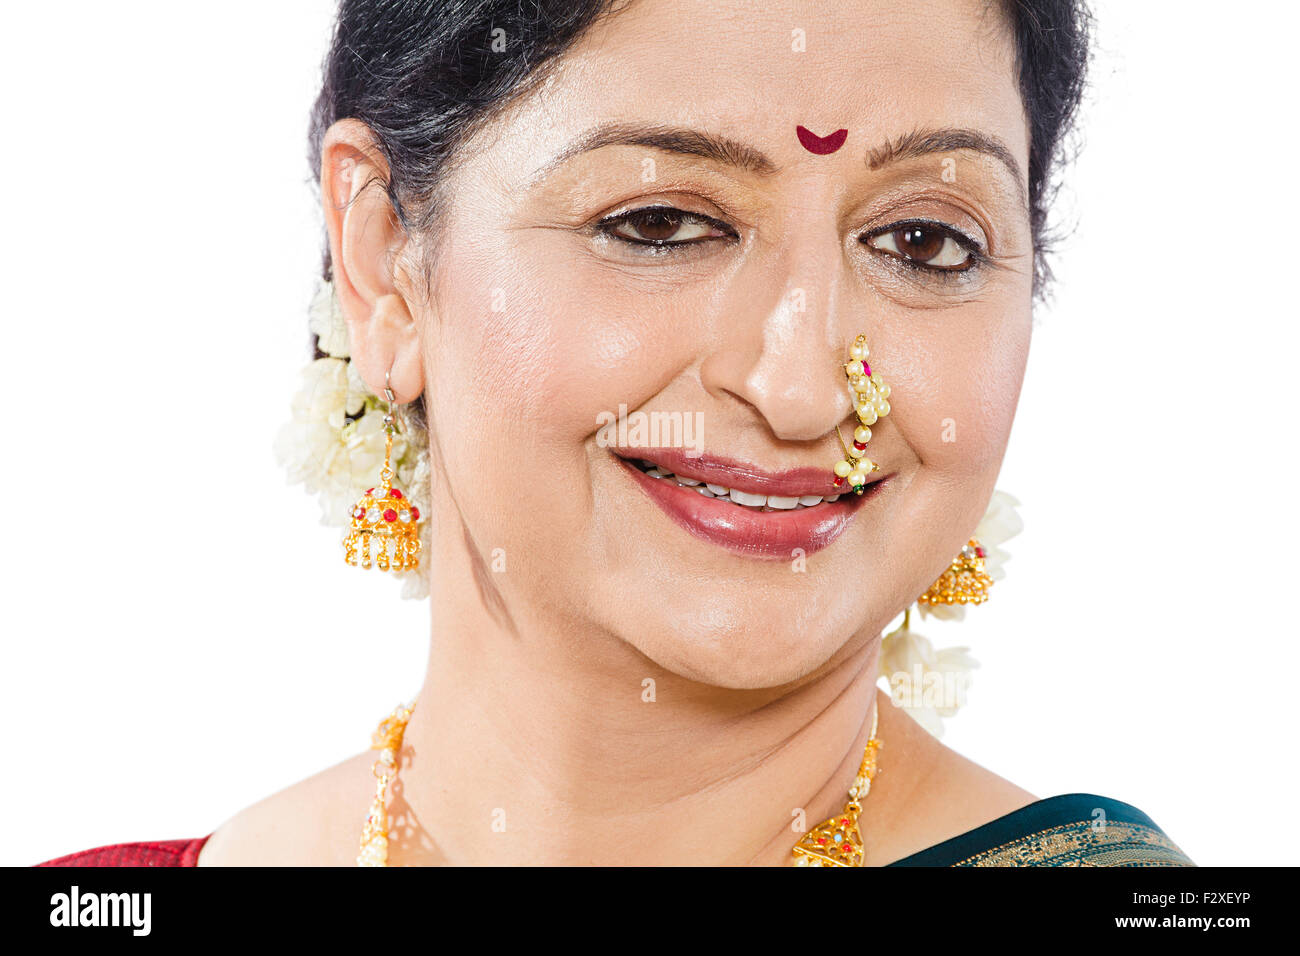 1 indian Marathi Adult Woman diwali Festival face Close-Up Stock Photo